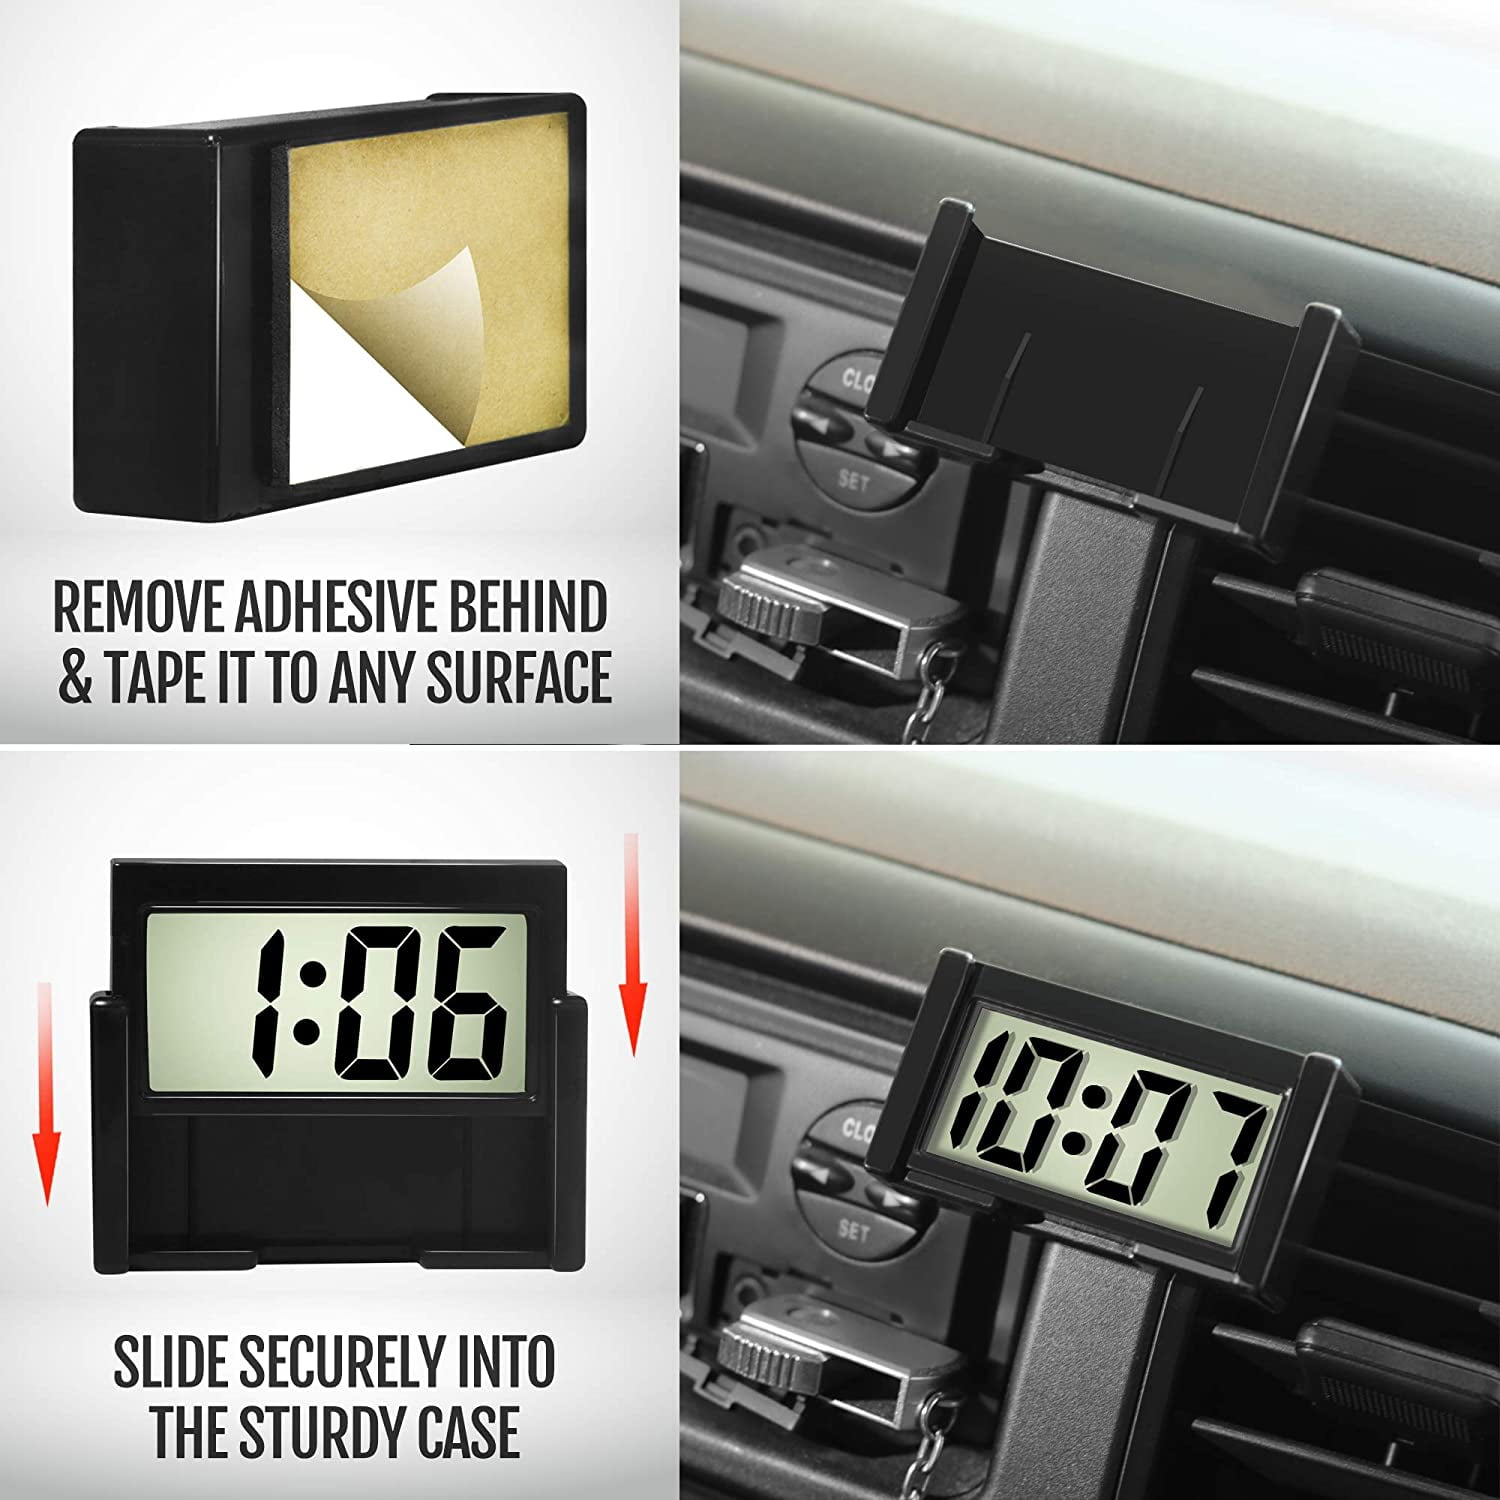 Auto Digital Car Dashboard LCD Clock Time Date Display Self-Adhesive Stick On FM 